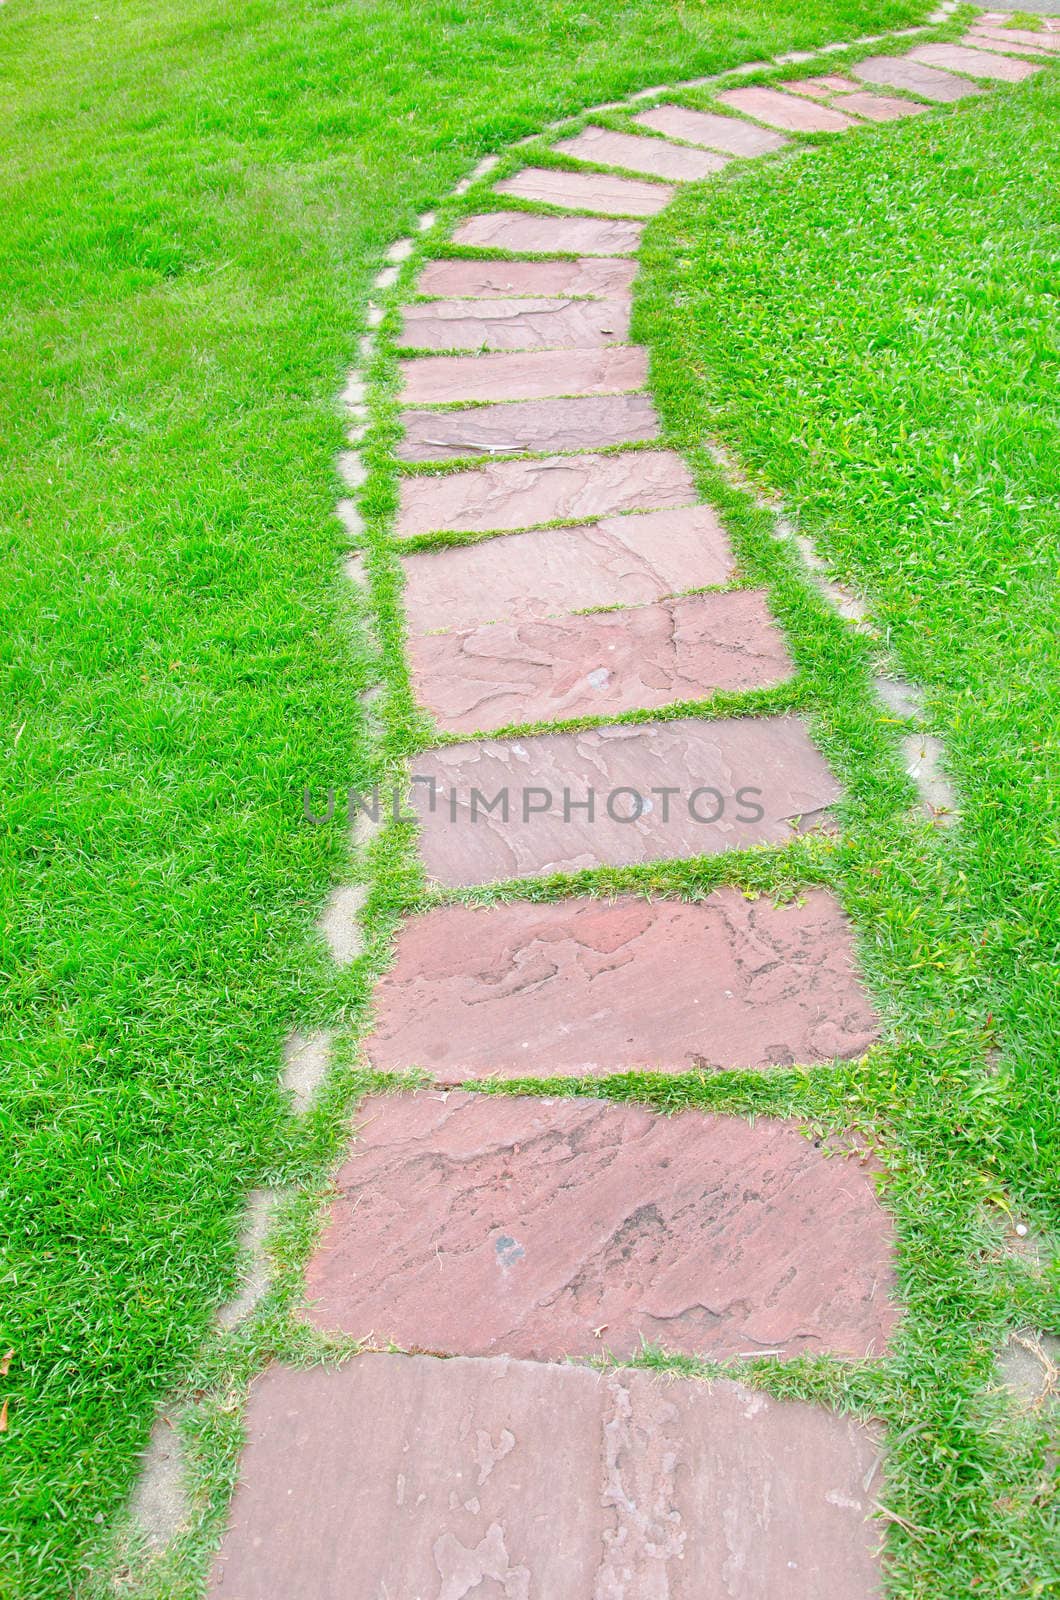 The Stone block walk path. by Gamjai